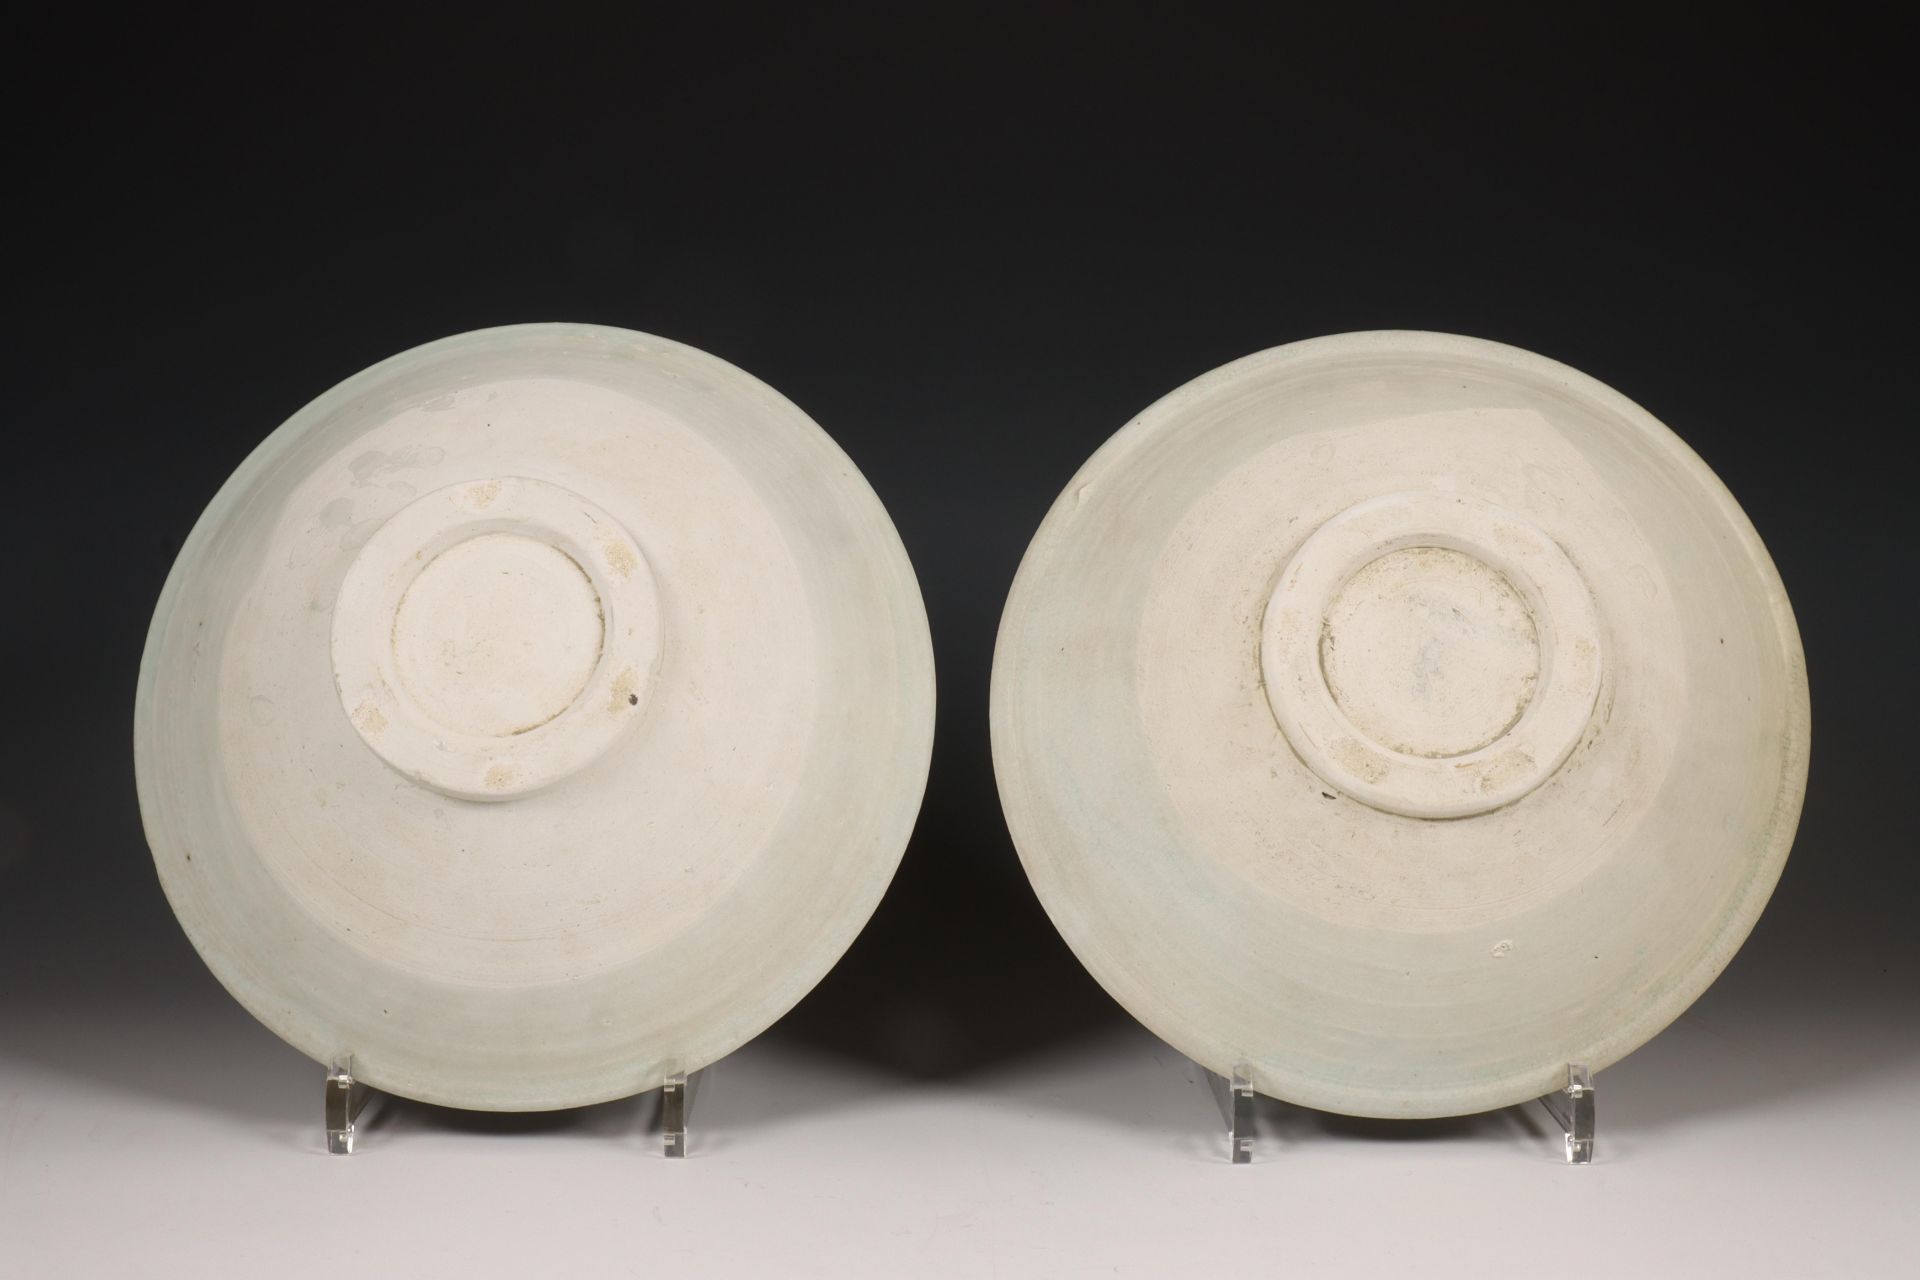 China, twee wit/ crème geglazuurde porseleinen schalen, Noordelijke Song-dynastie, 10e-12e eeuw, - Bild 2 aus 2